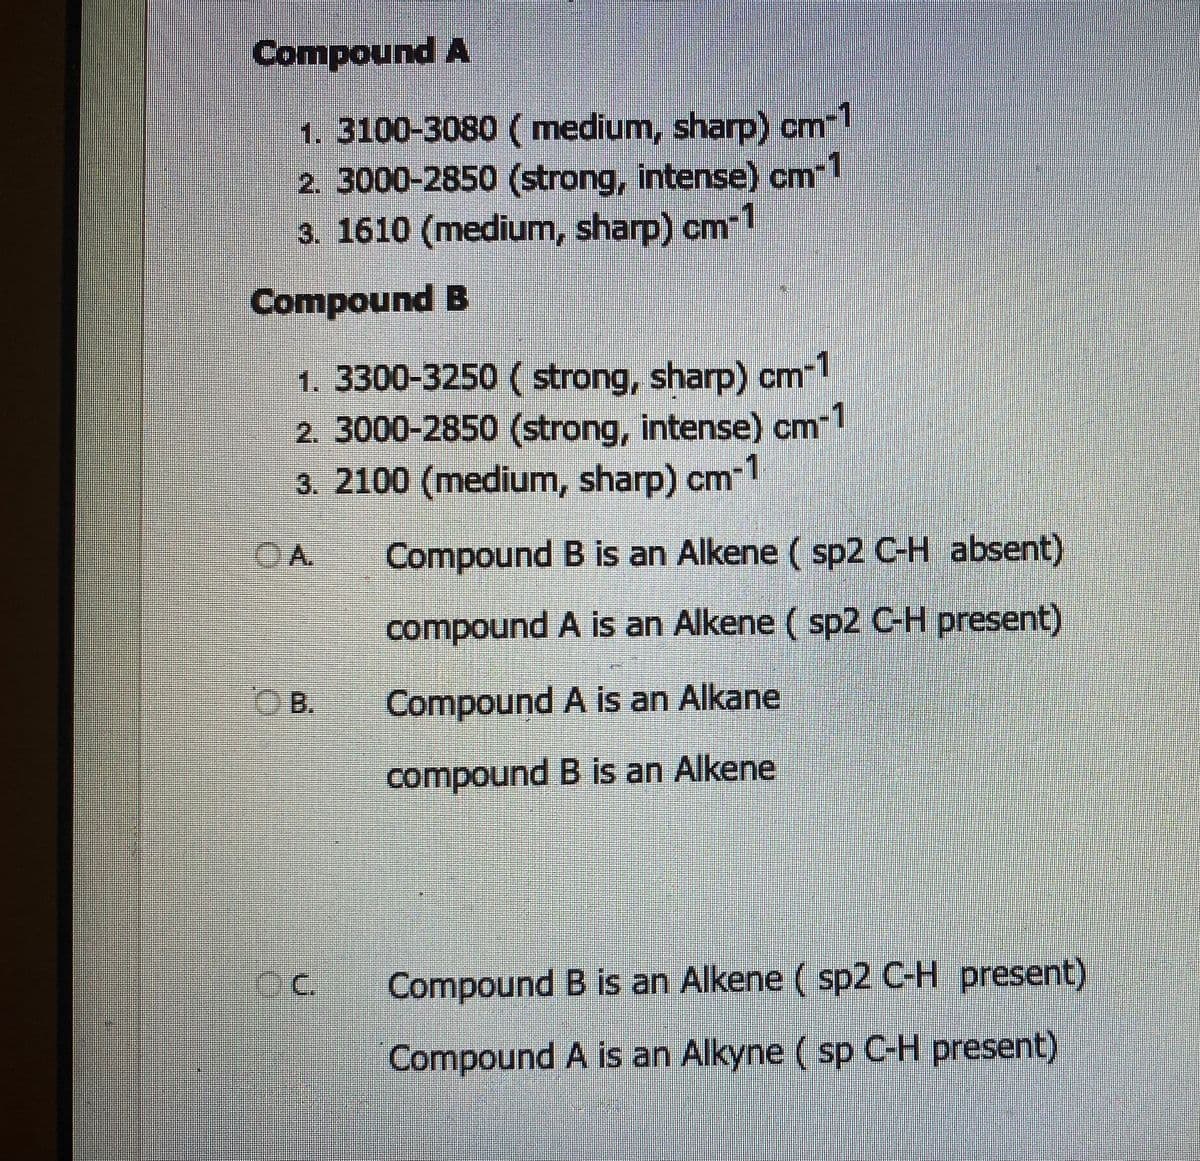 Compound A
1. 3100-3080 (medium, sharp) cm-1
2. 3000-2850 (strong, intense) cm-1
3. 1610 (medium, sharp) cm-1
Compound B
1. 3300-3250 (strong, sharp) cm-1
2. 3000-2850 (strong, intense) cm-1
3. 2100 (medium, sharp) cm-1
A
B.
CC.
Compound B is an Alkene (sp2 C-H absent)
compound A is an Alkene (sp2 C-H present)
Compound A is an Alkane
compound B is an Alkene
Compound B is an Alkene (sp2 C-H present)
Compound A is an Alkyne (sp C-H present)